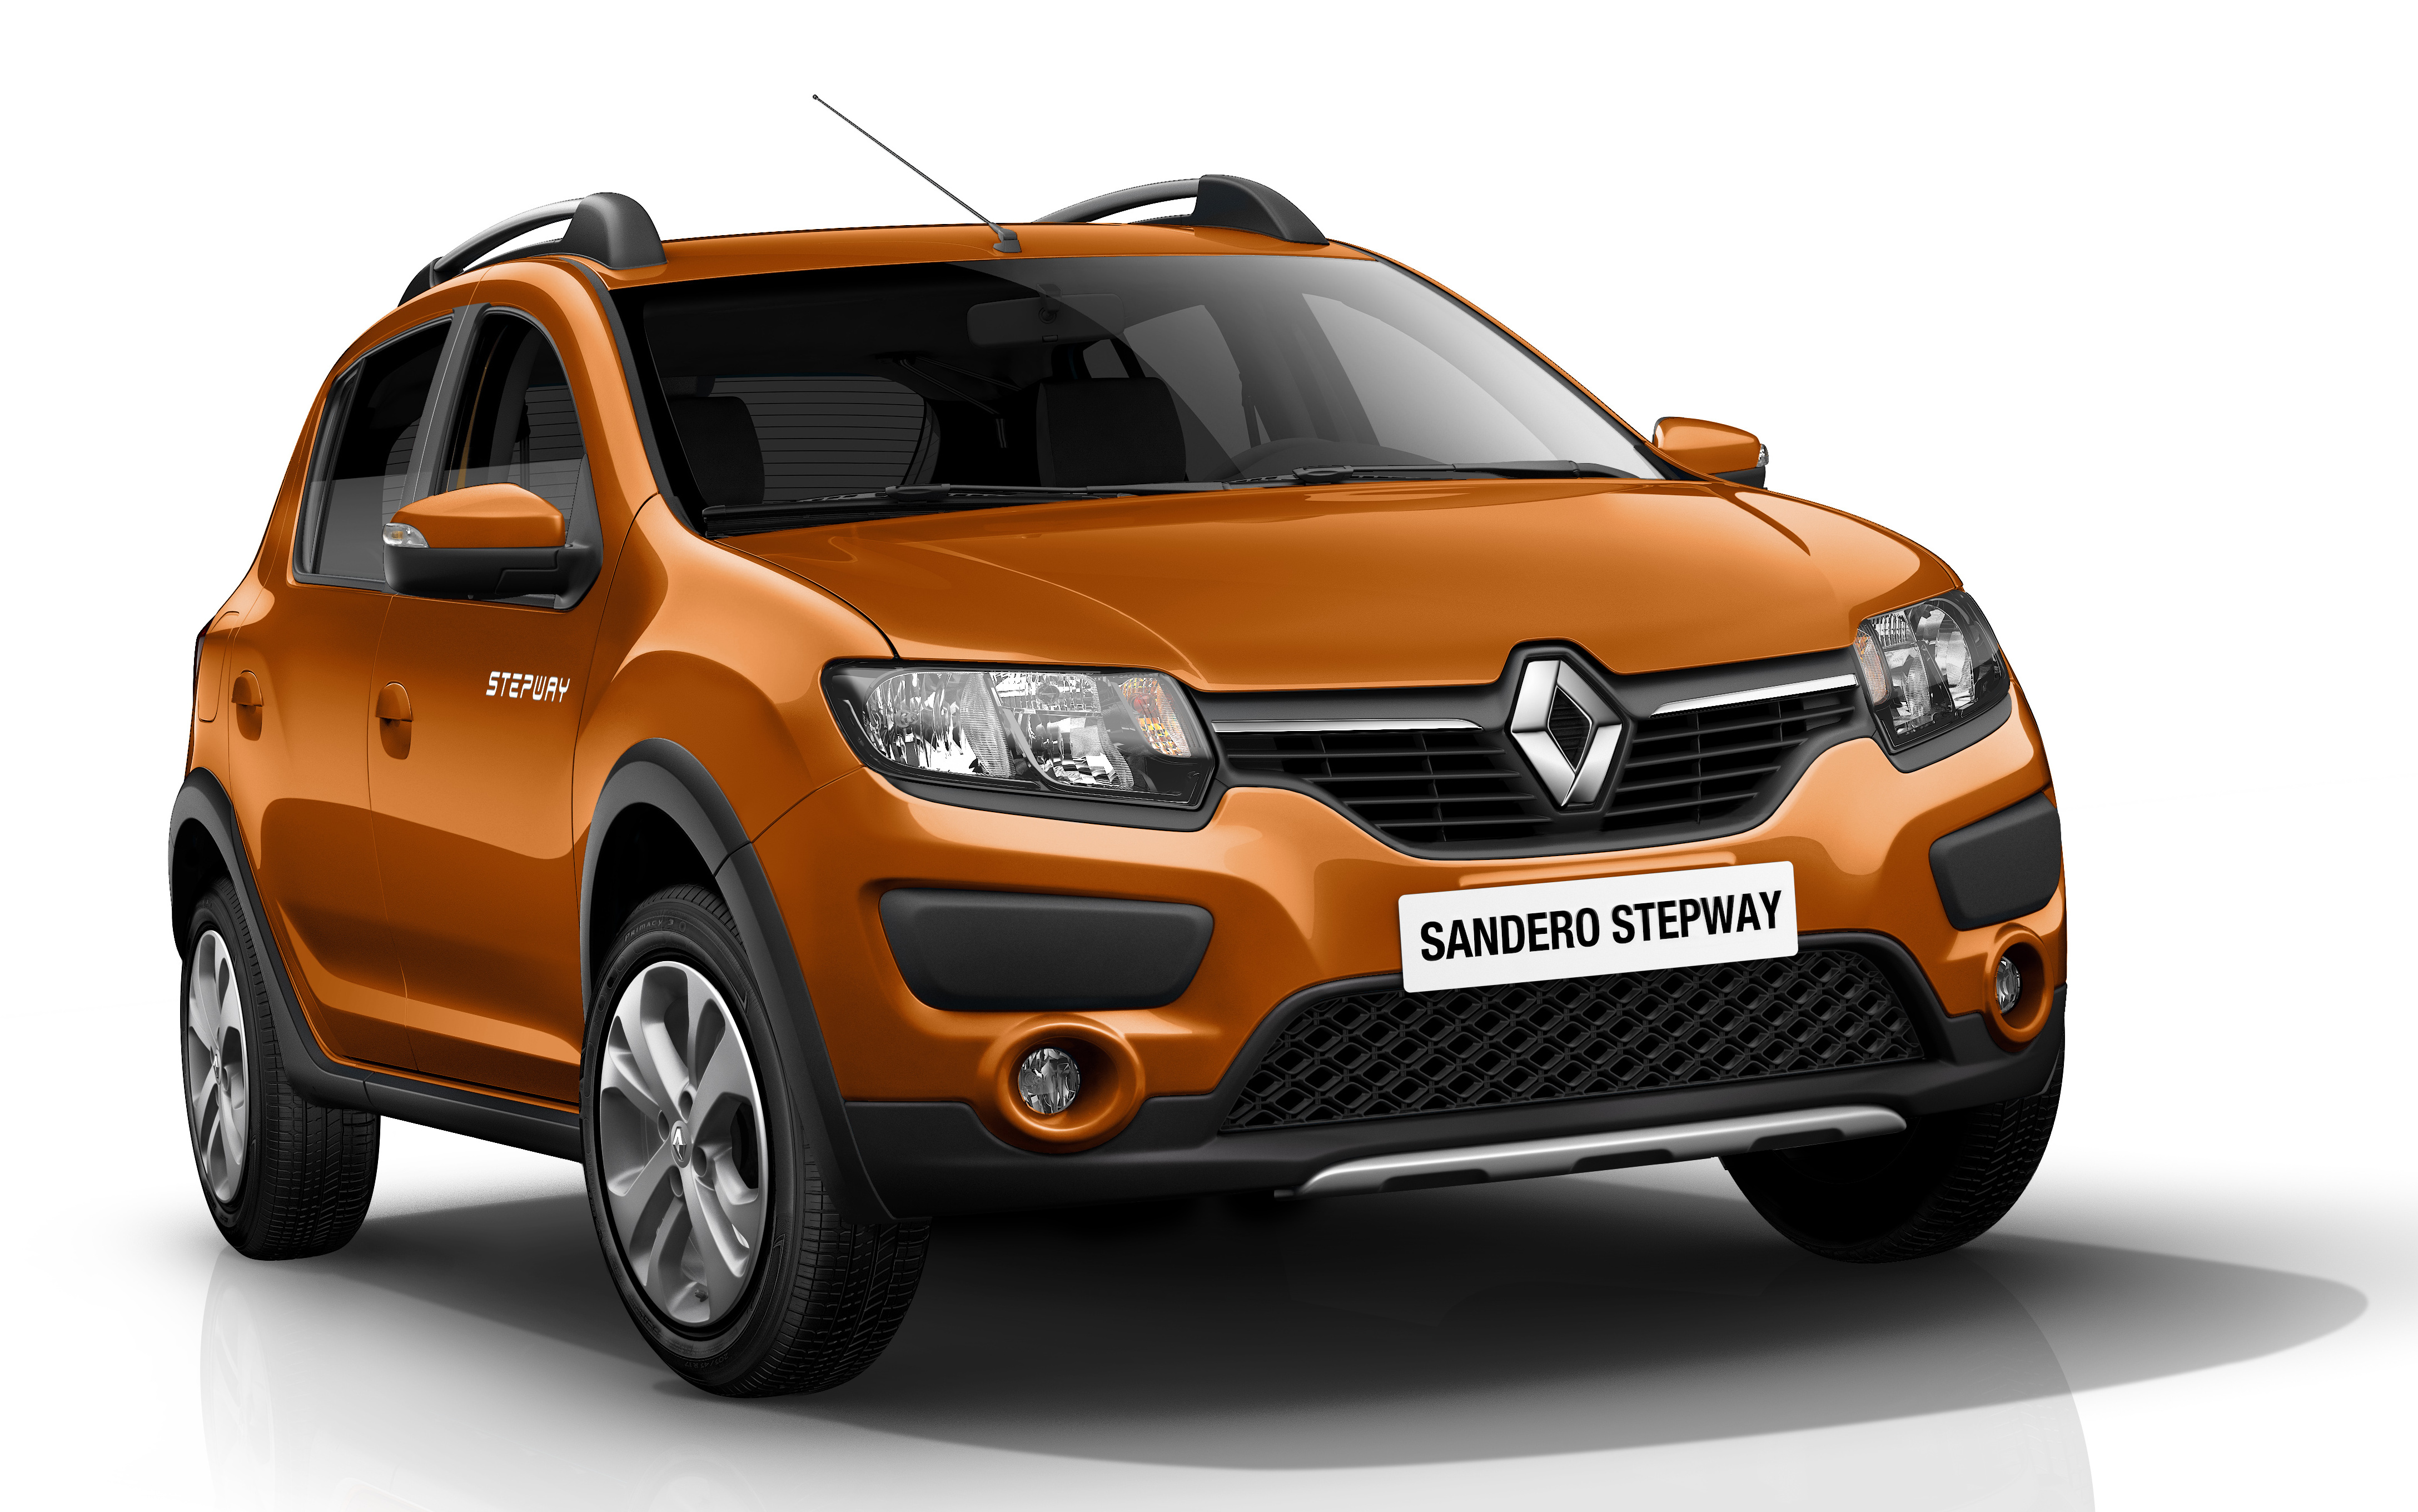 Renault Sandero Stepway modern specifications